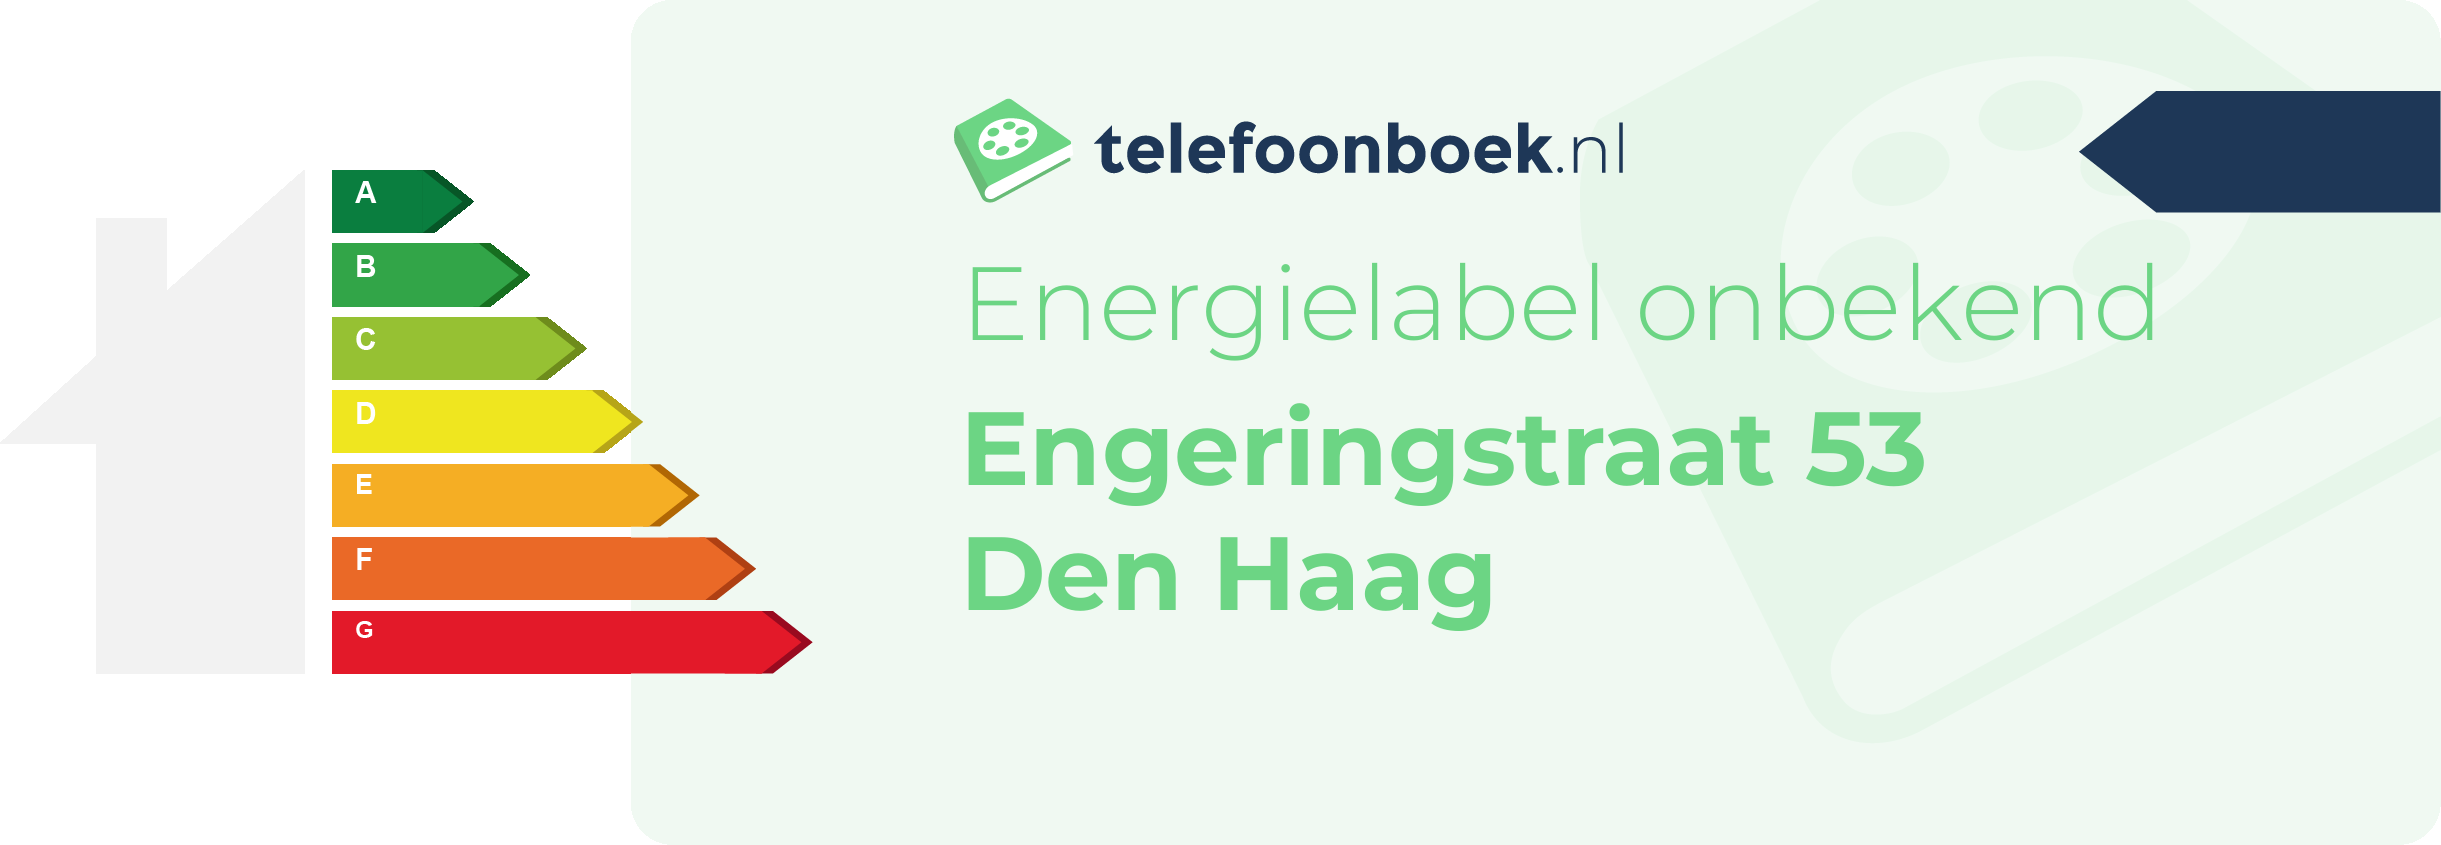 Energielabel Engeringstraat 53 Den Haag